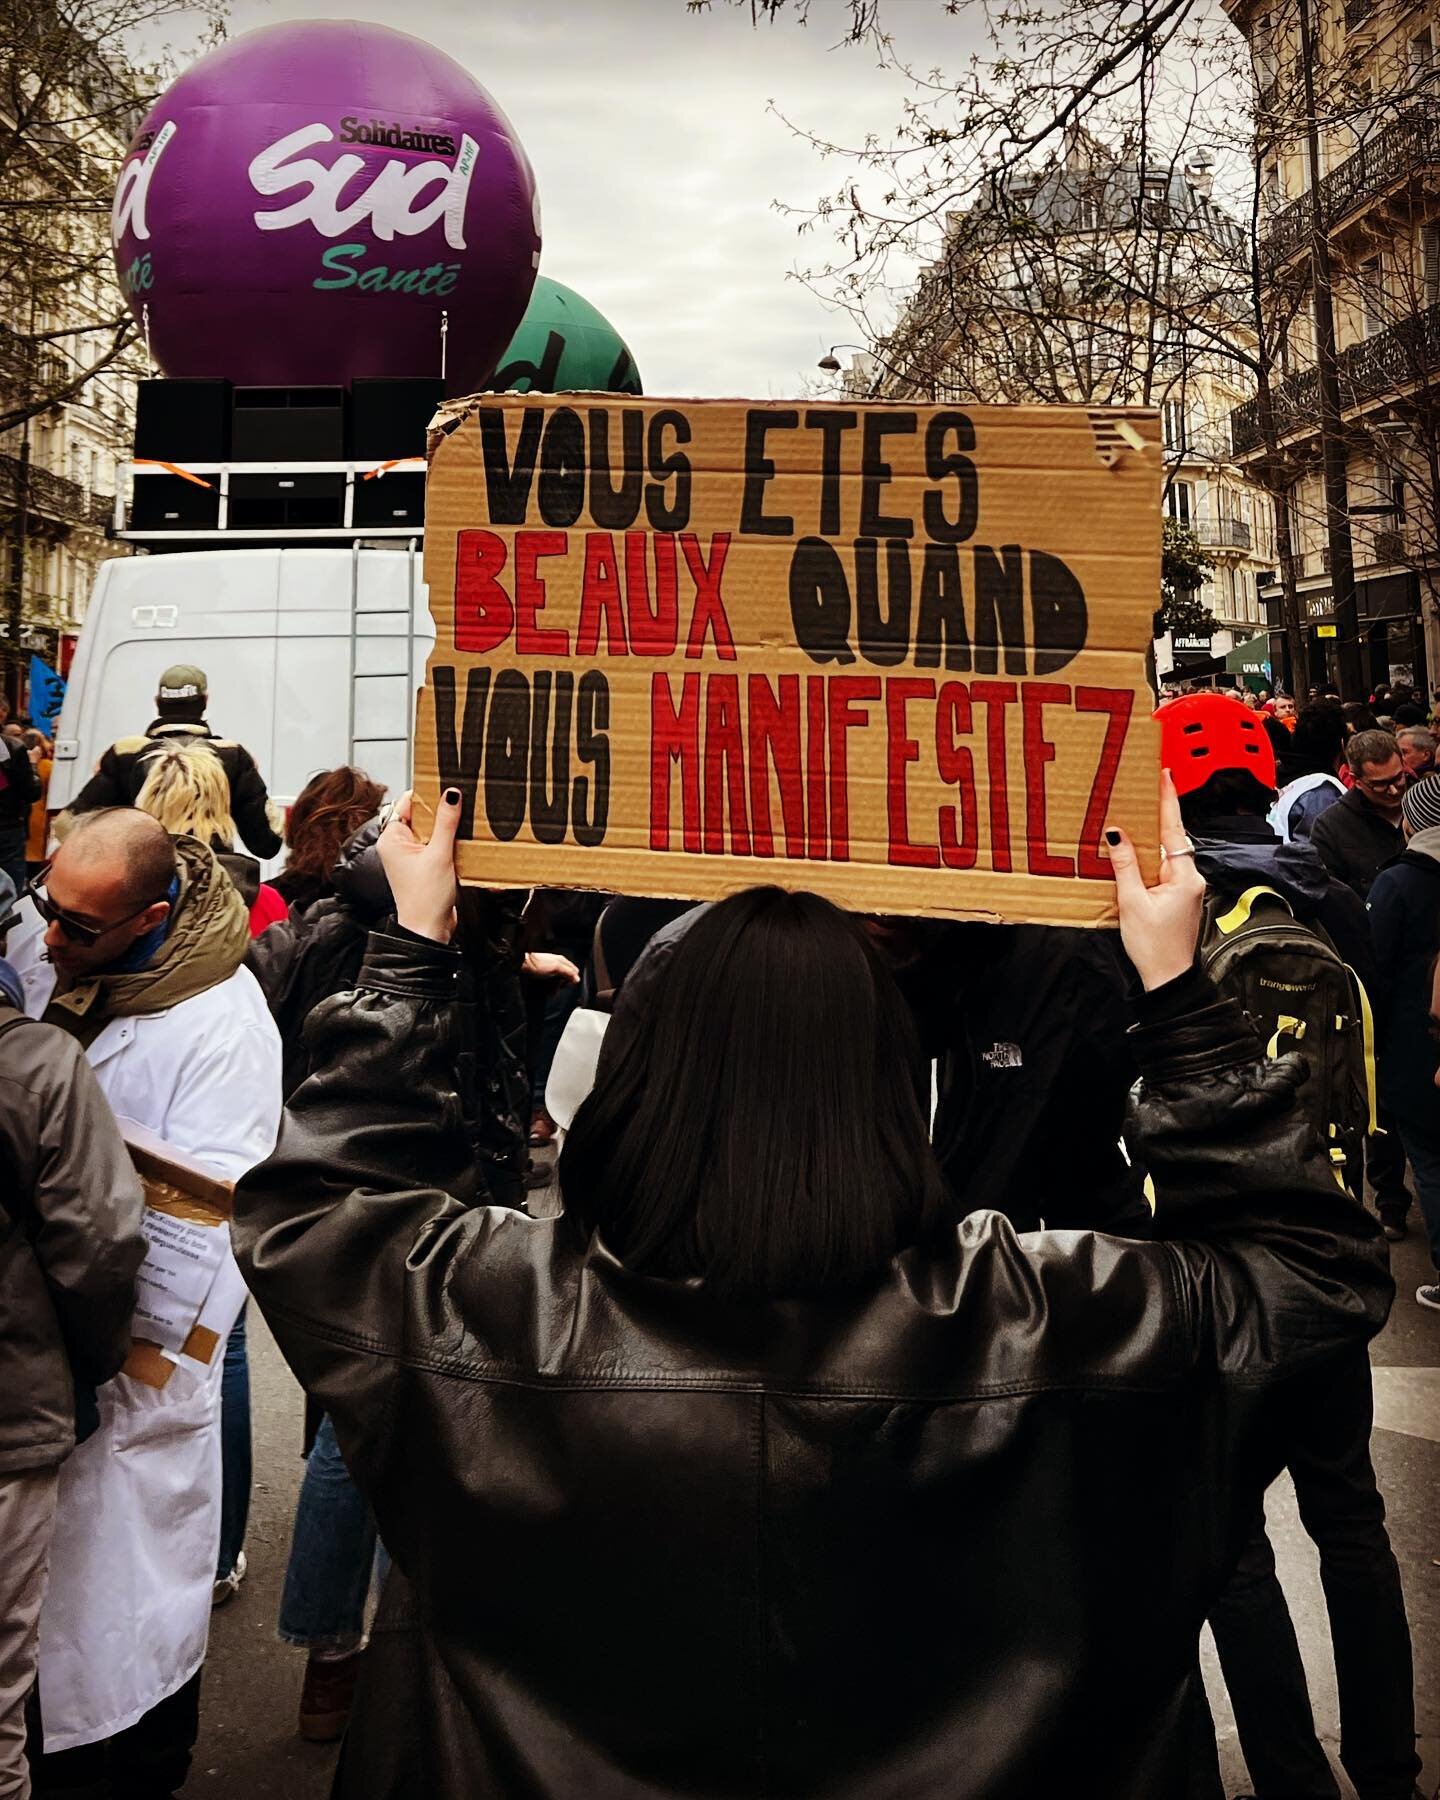 &ldquo;You are beautiful when you protest&rdquo; in Paris. #manifestationparis